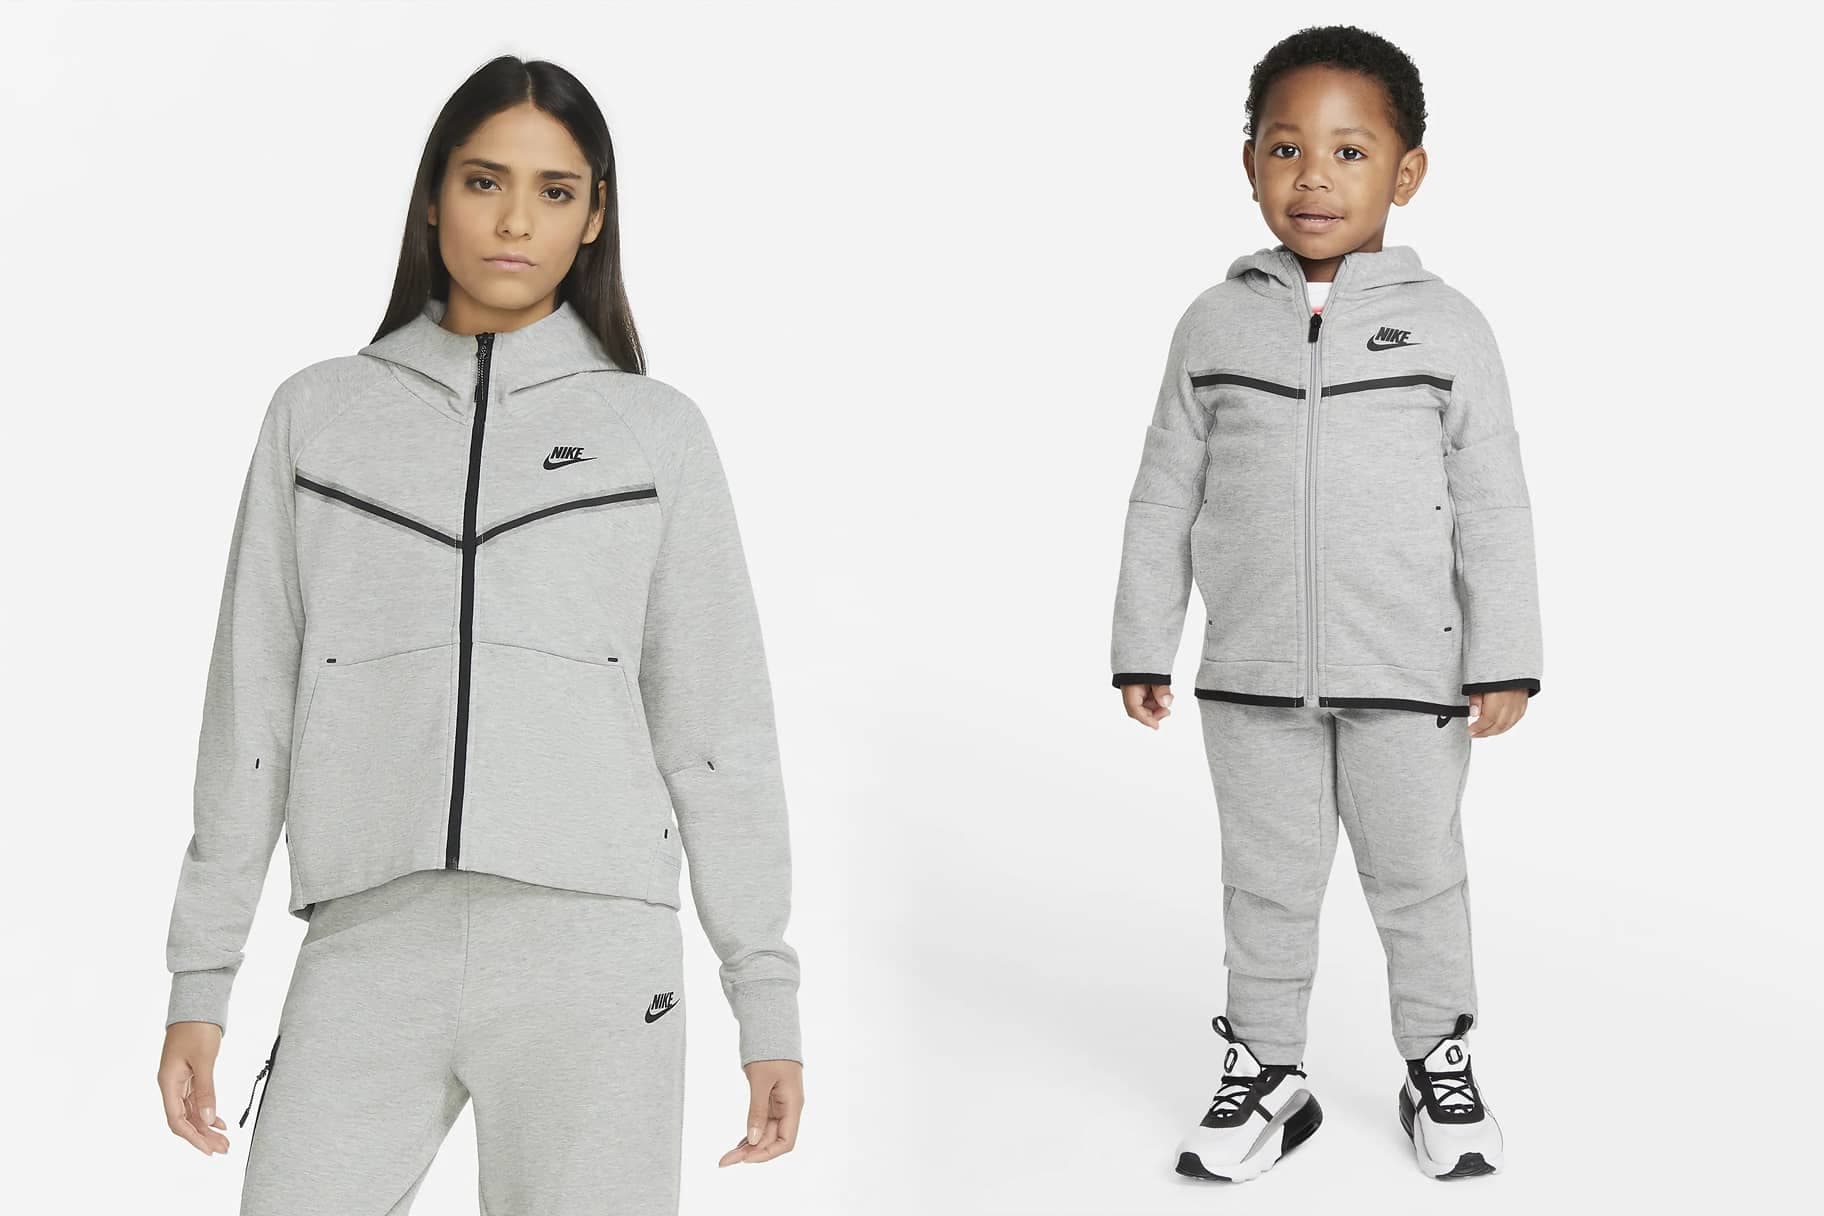 Comparación Consulado su Shop Matching Nike Outfits for the Whole Family. Nike.com